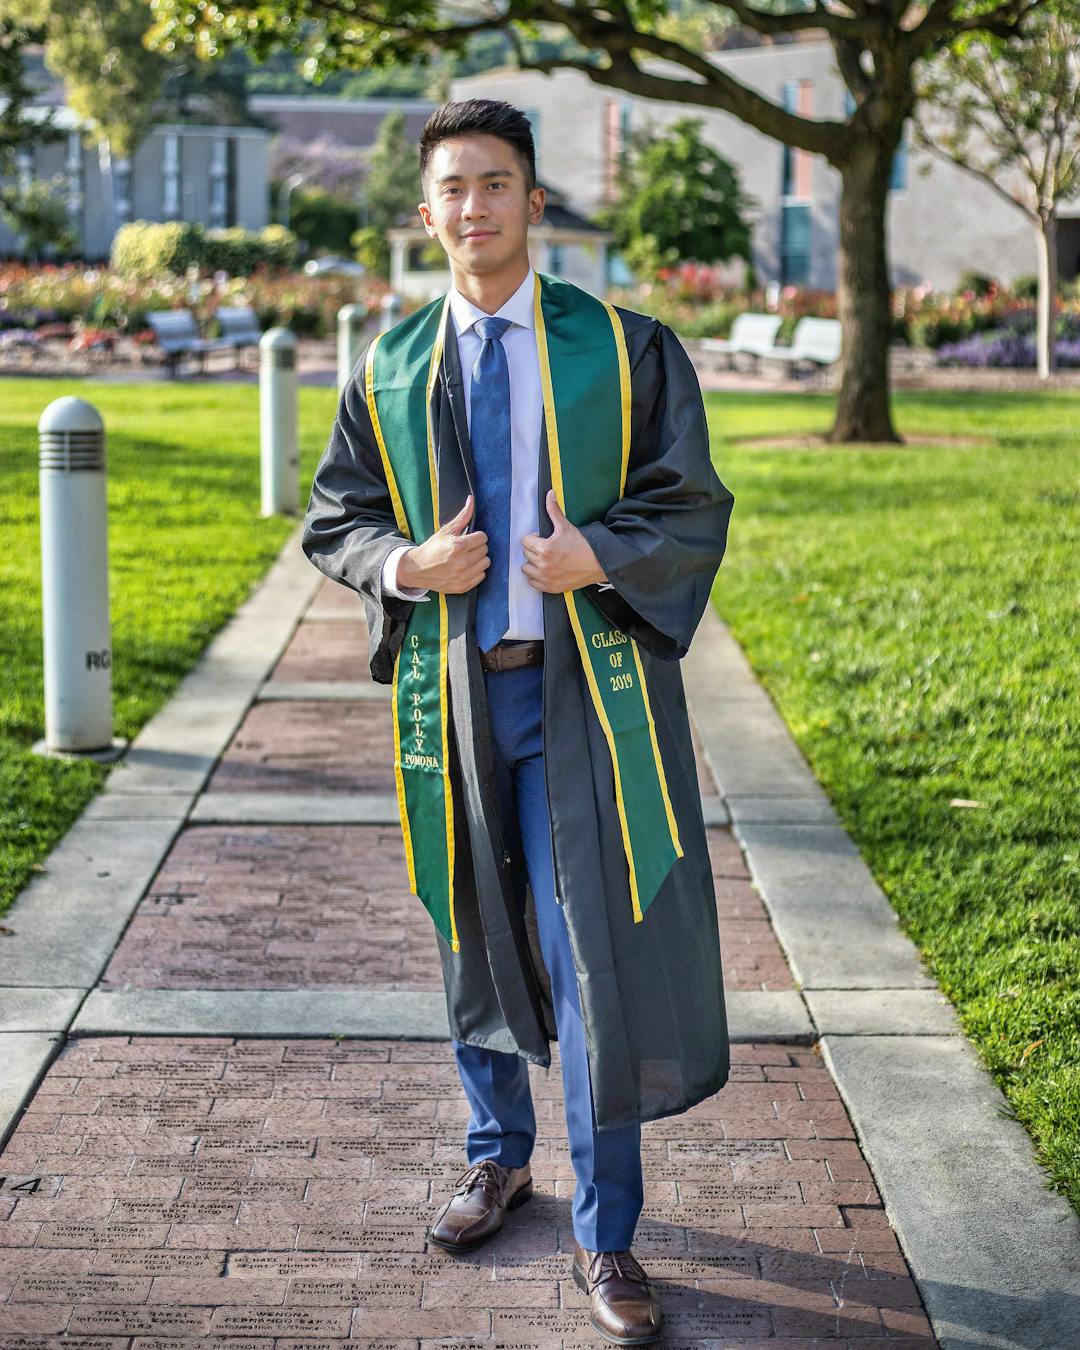 Man standing in graduation gown.